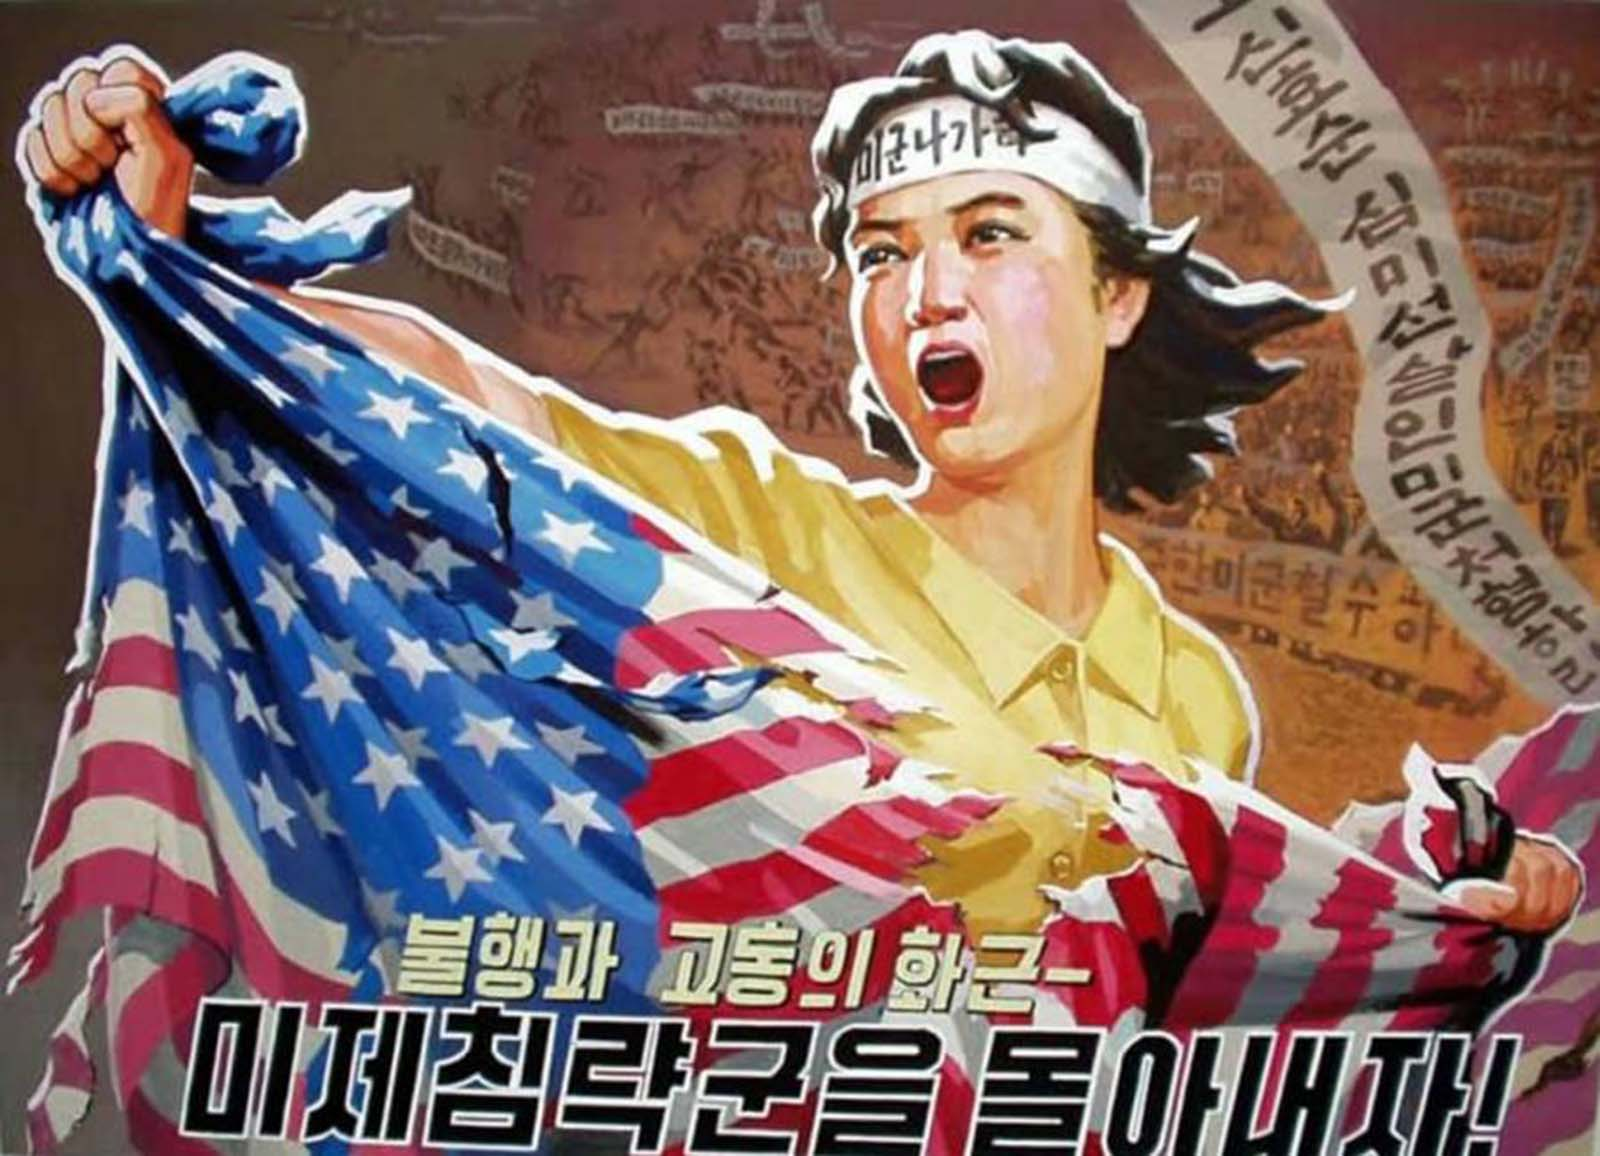 Thumbnail for File:Korean anti-USA poster.png